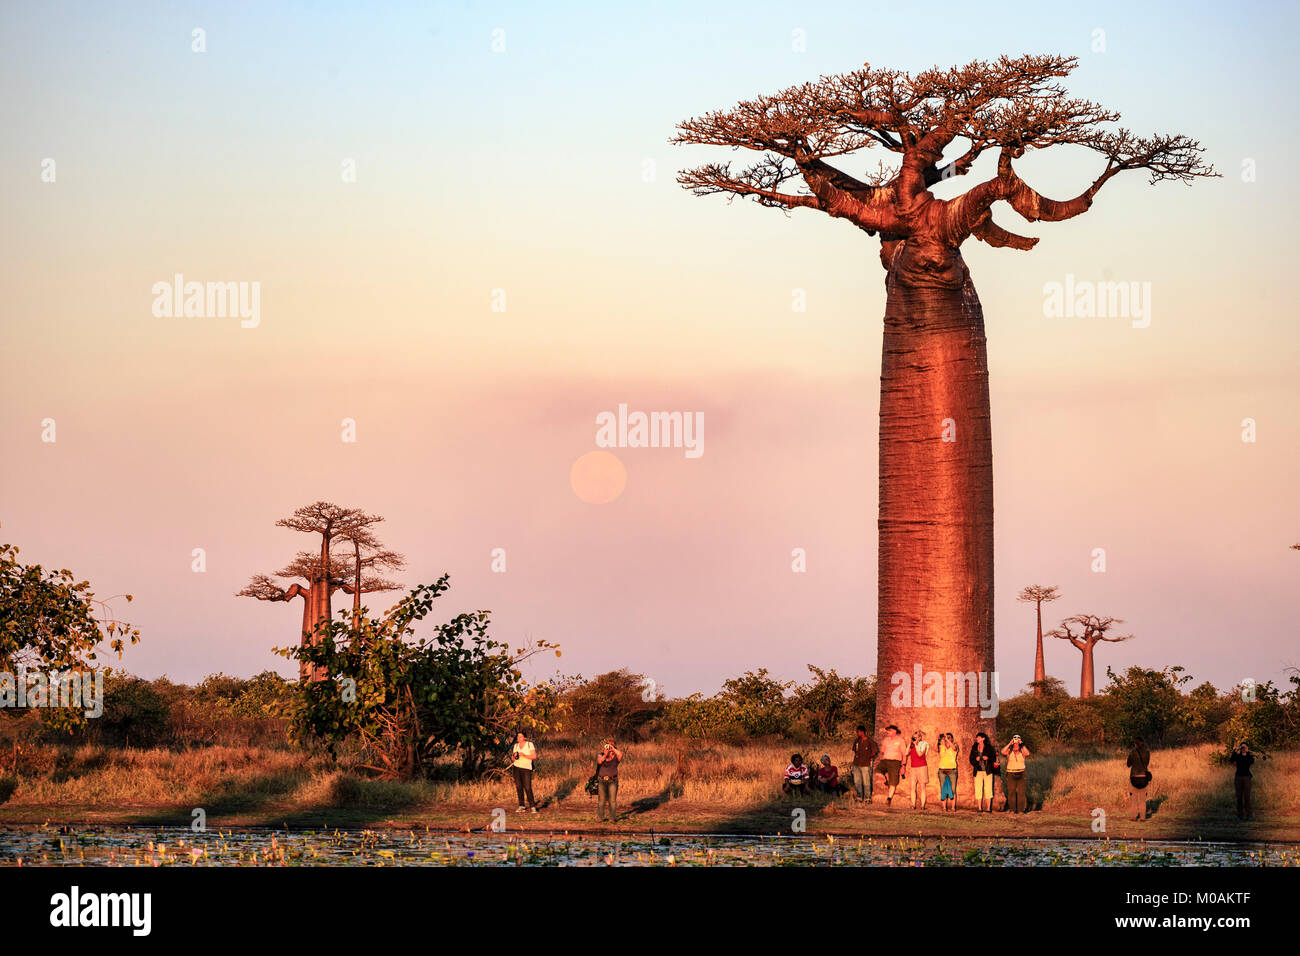 Baobab trees along the rural road at sunny day Stock Photo